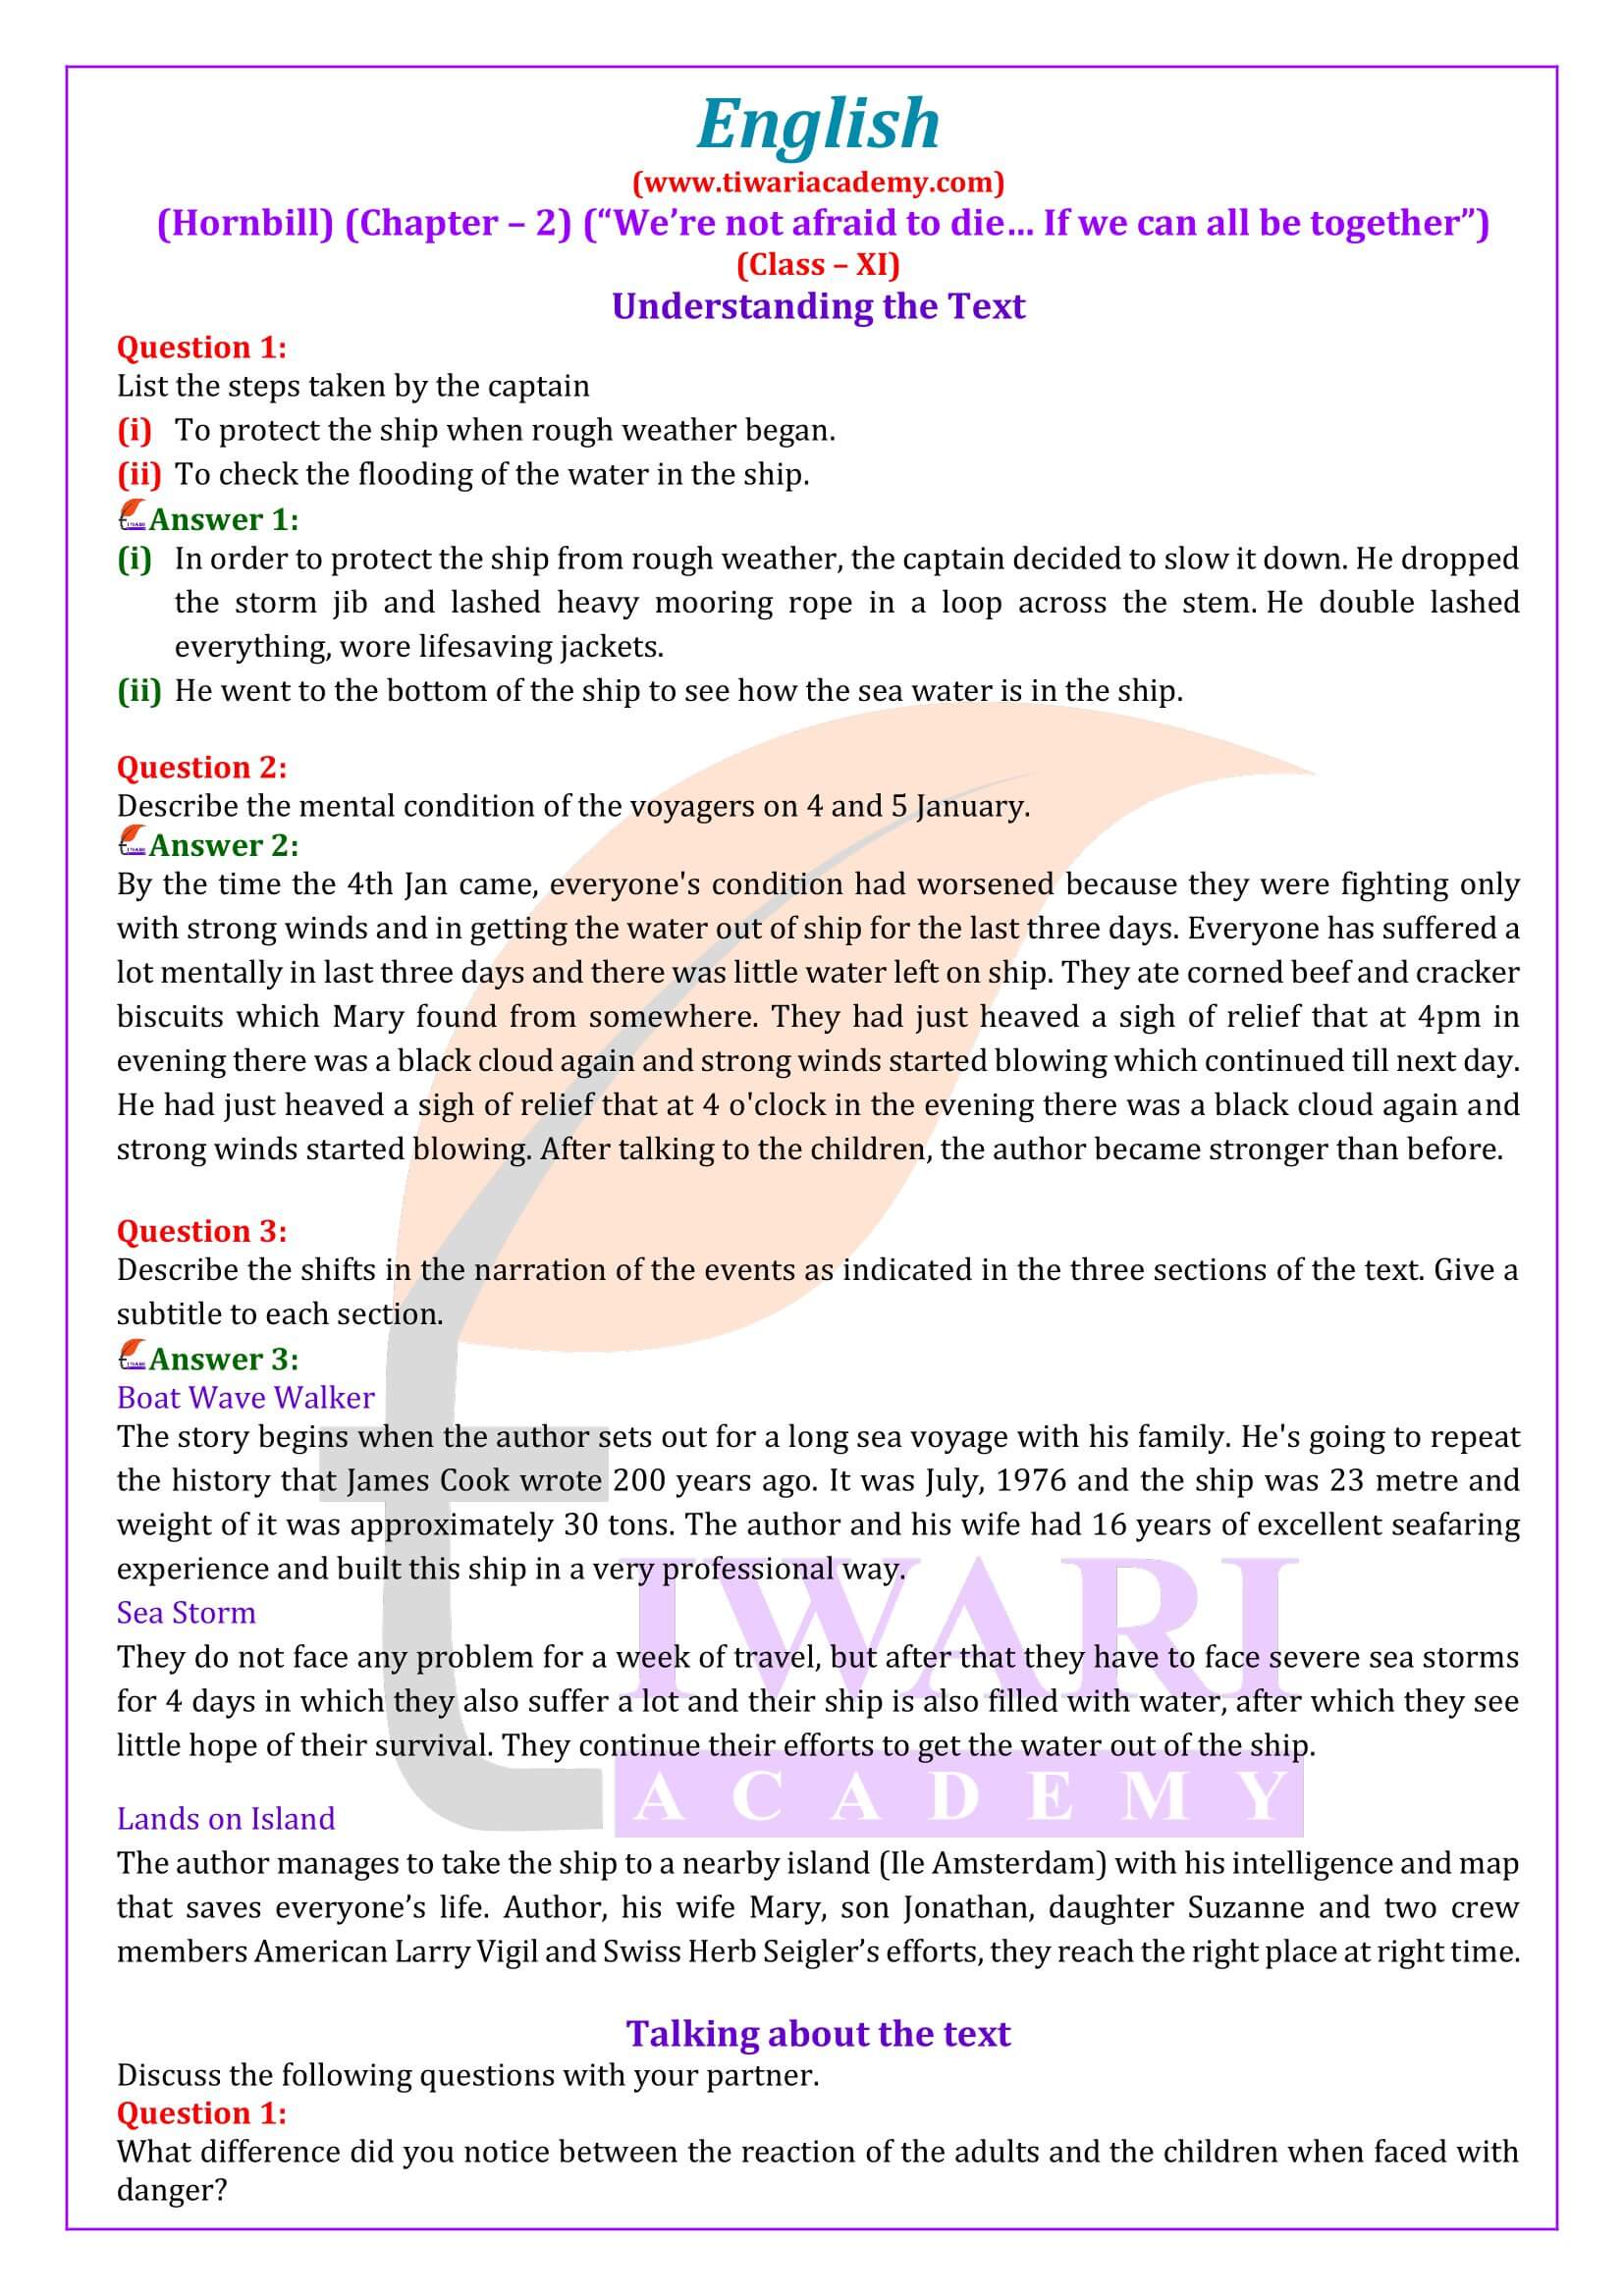 NCERT Solutions for Class 11 English Hornbill Chapter 2